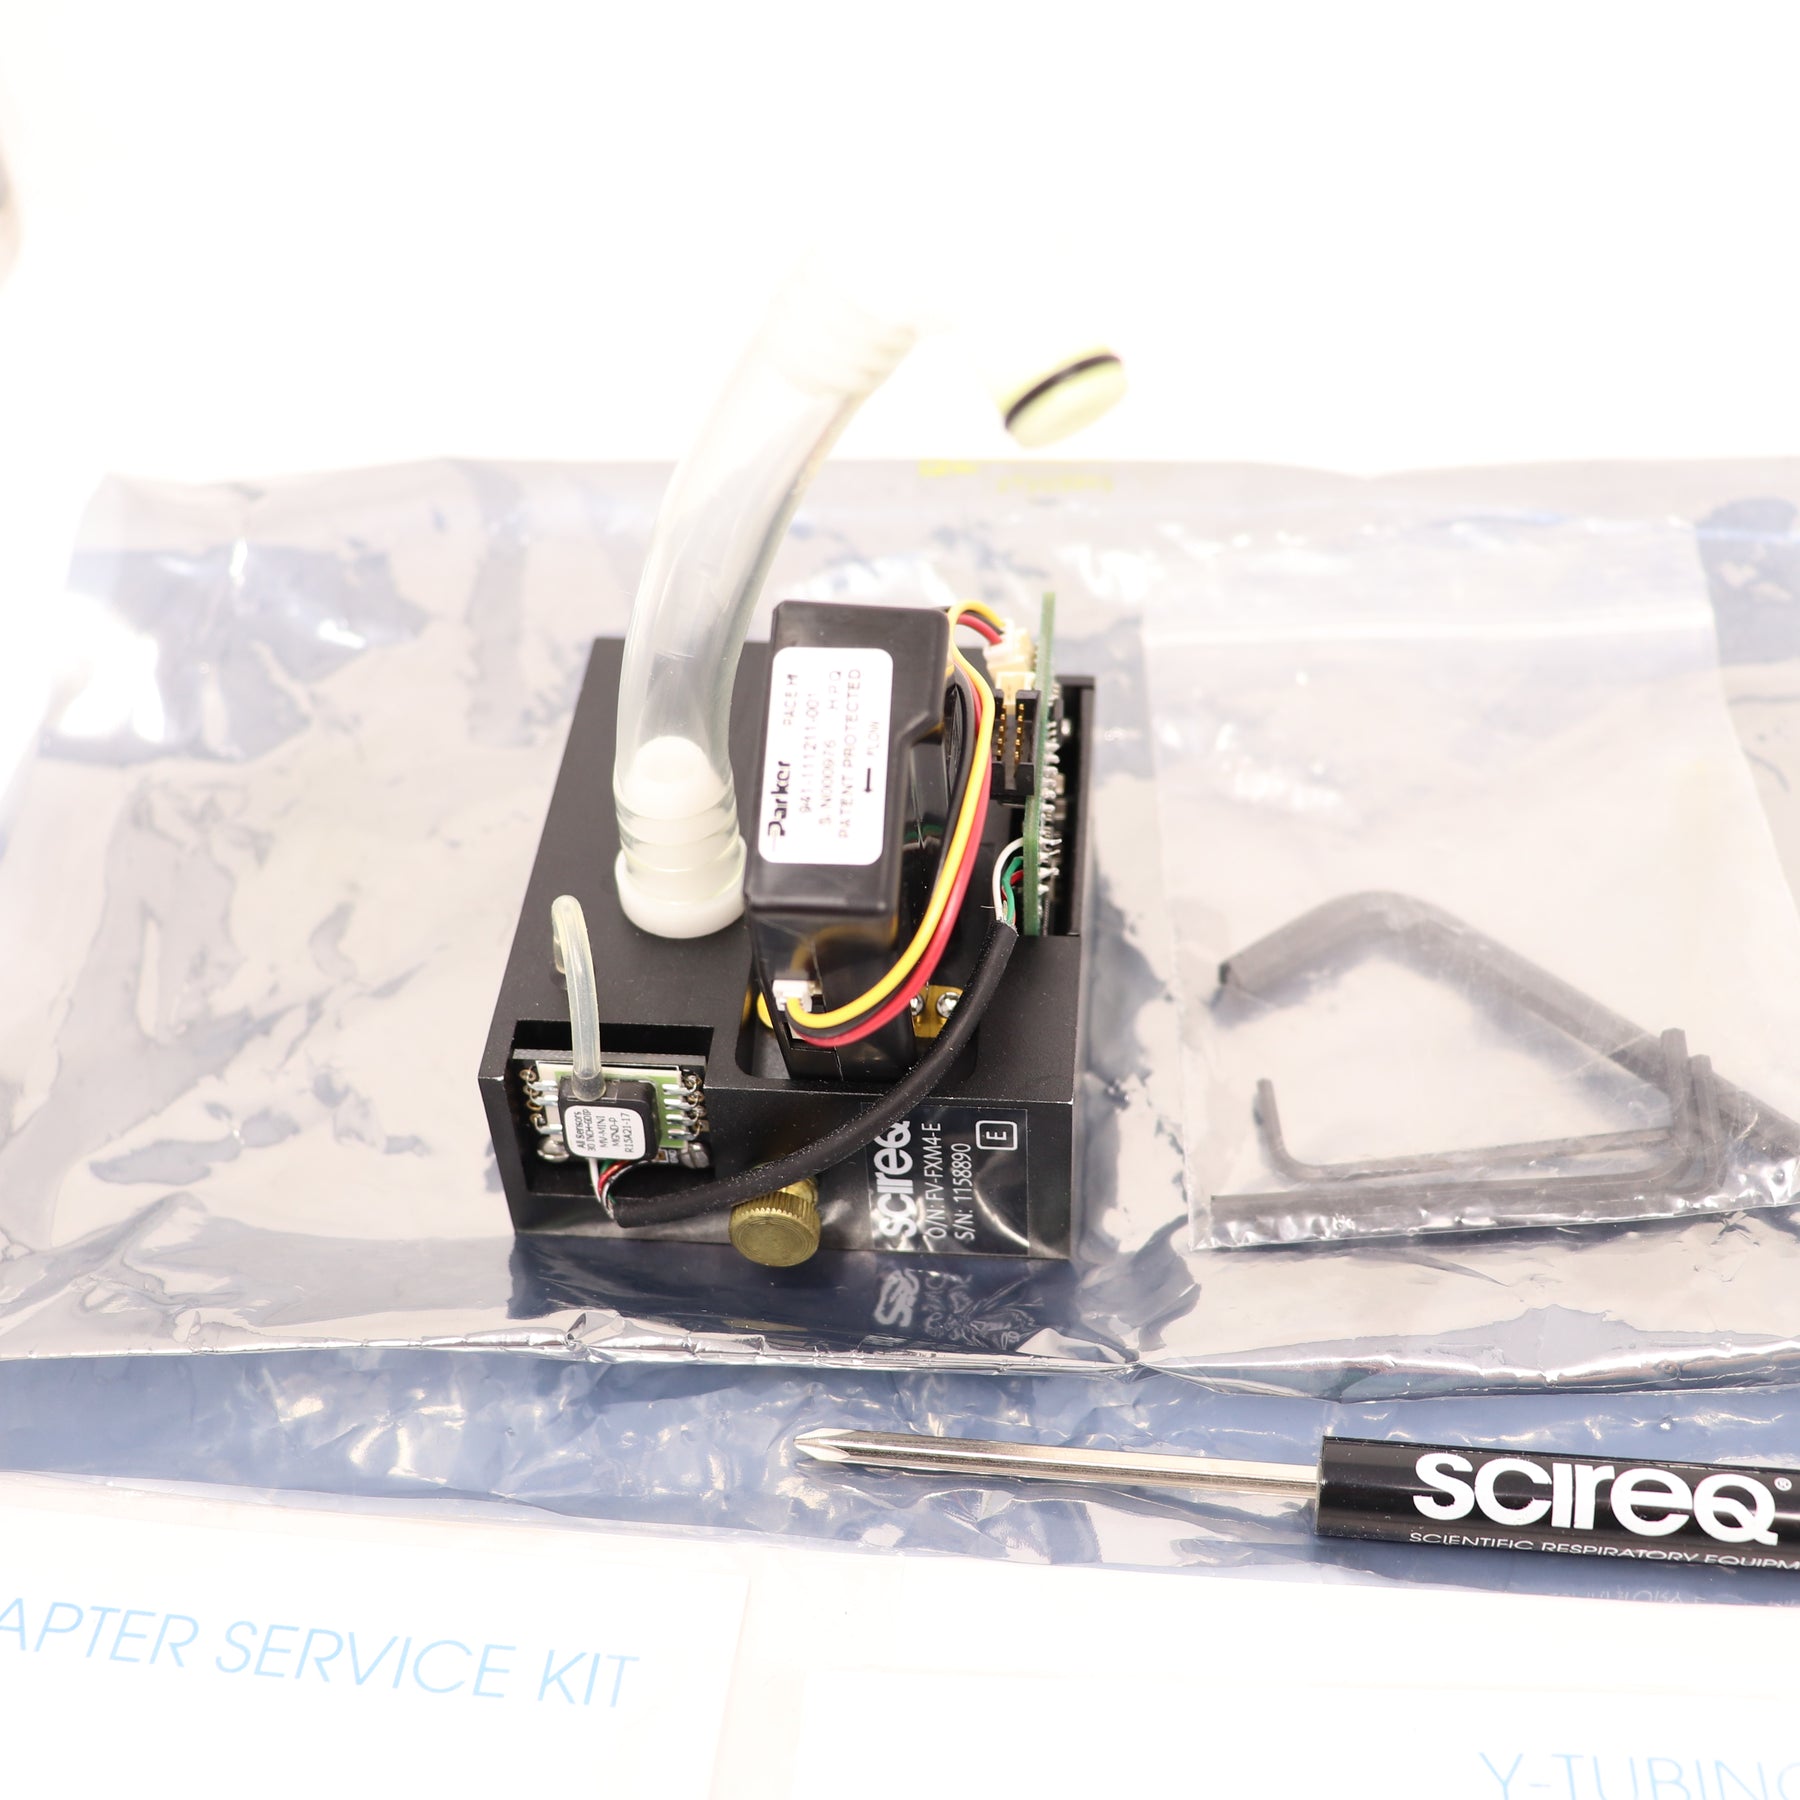 Scireq FlexiVent Maintenance kit